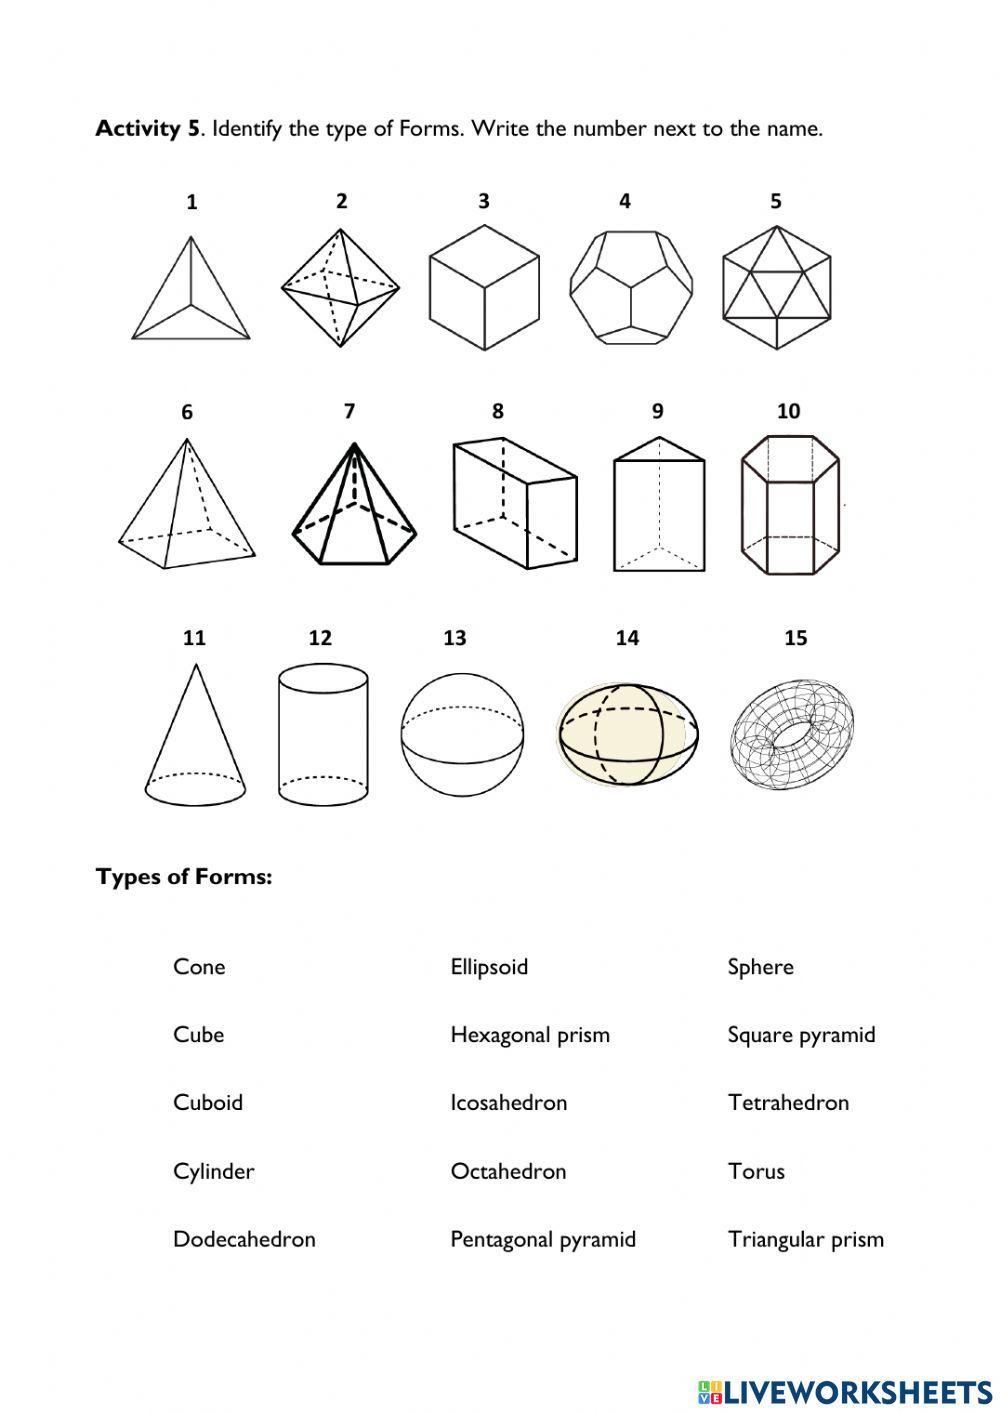 Basic Elements of Art &Design